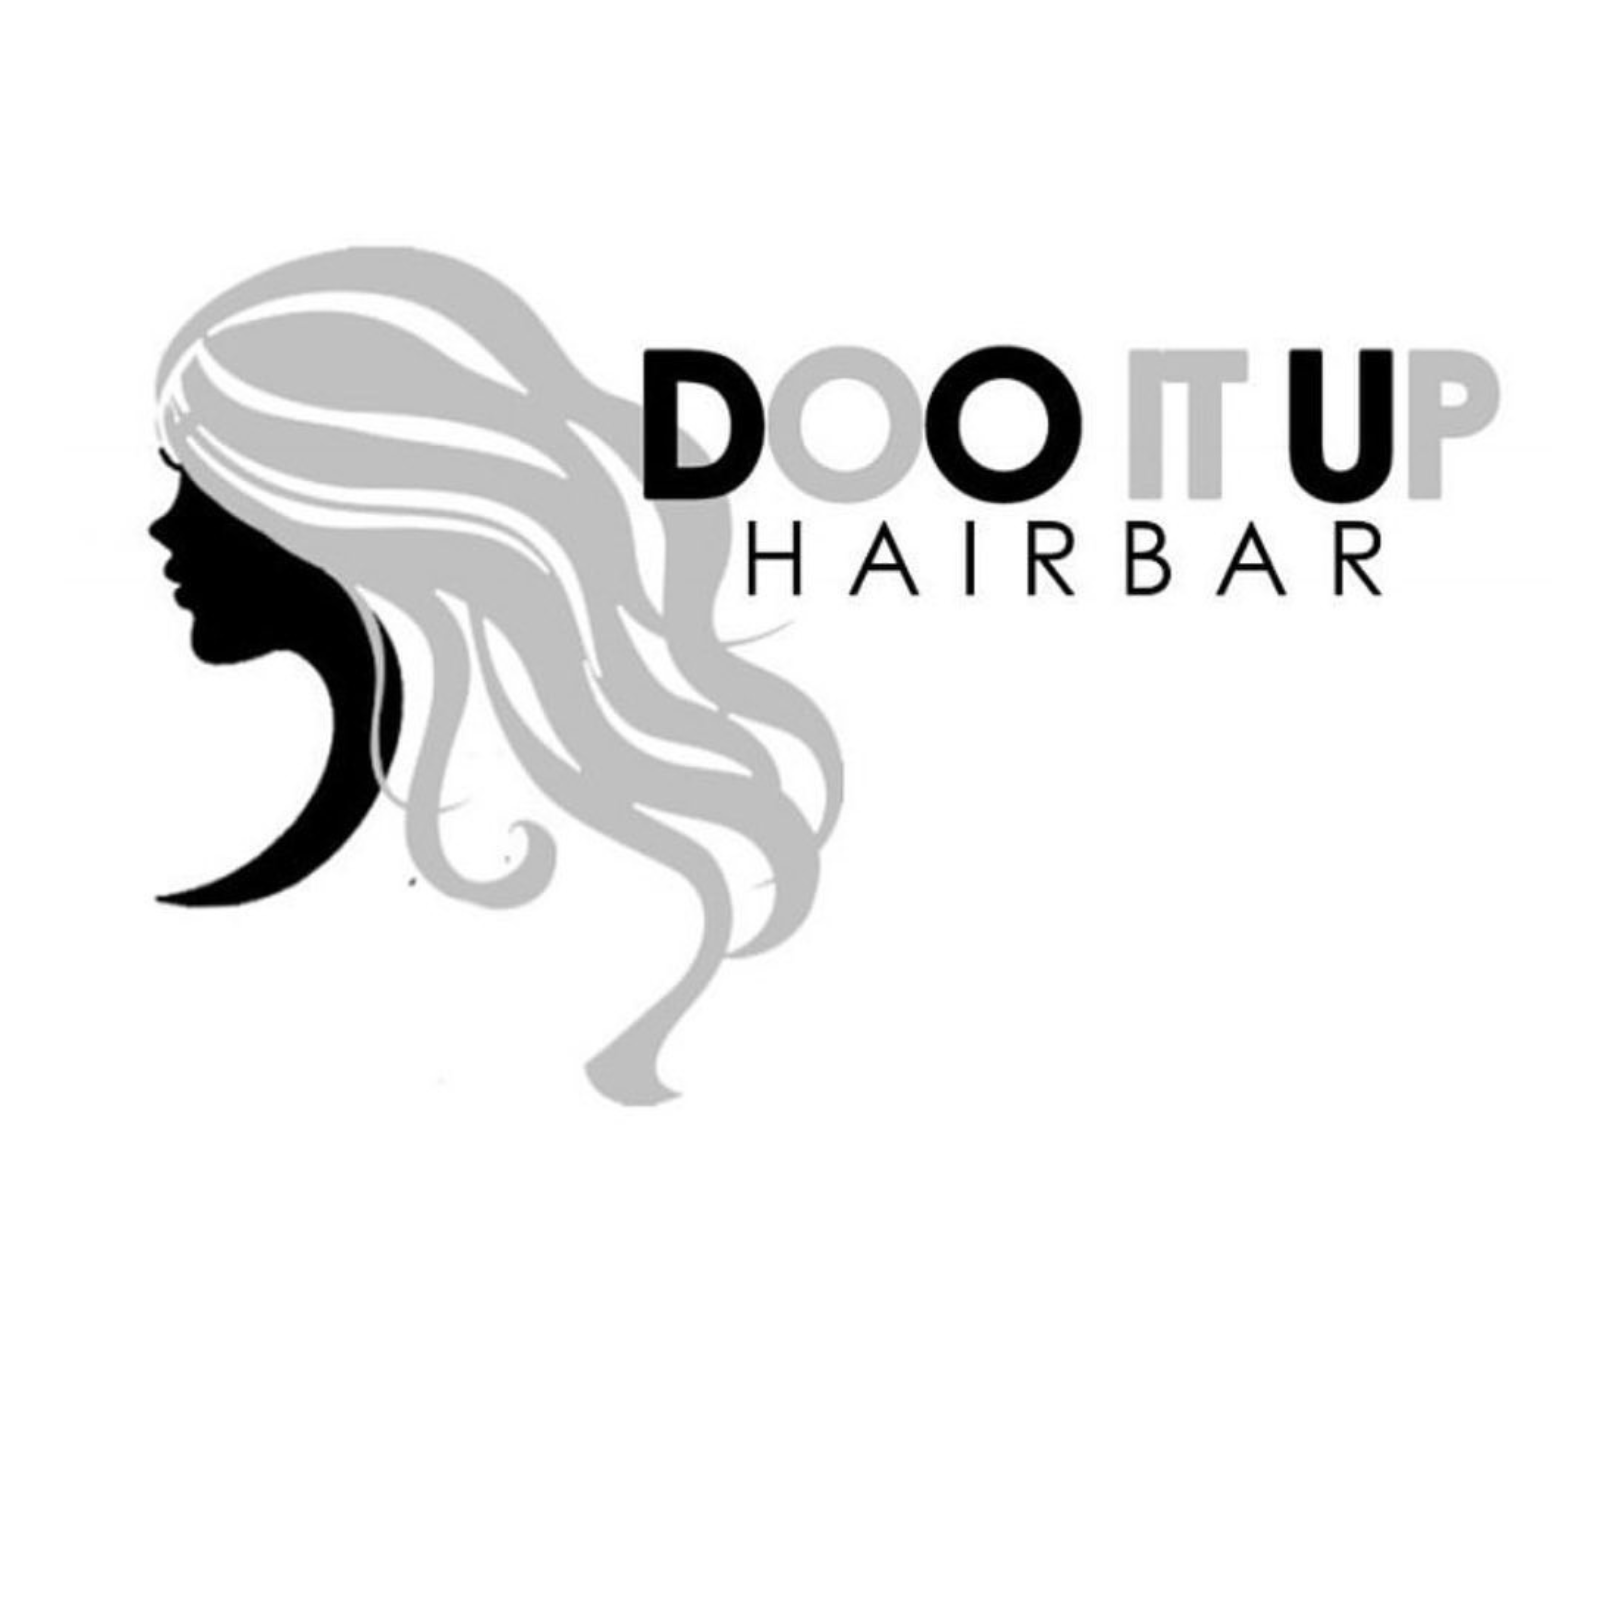 Doo it up Hair Bar